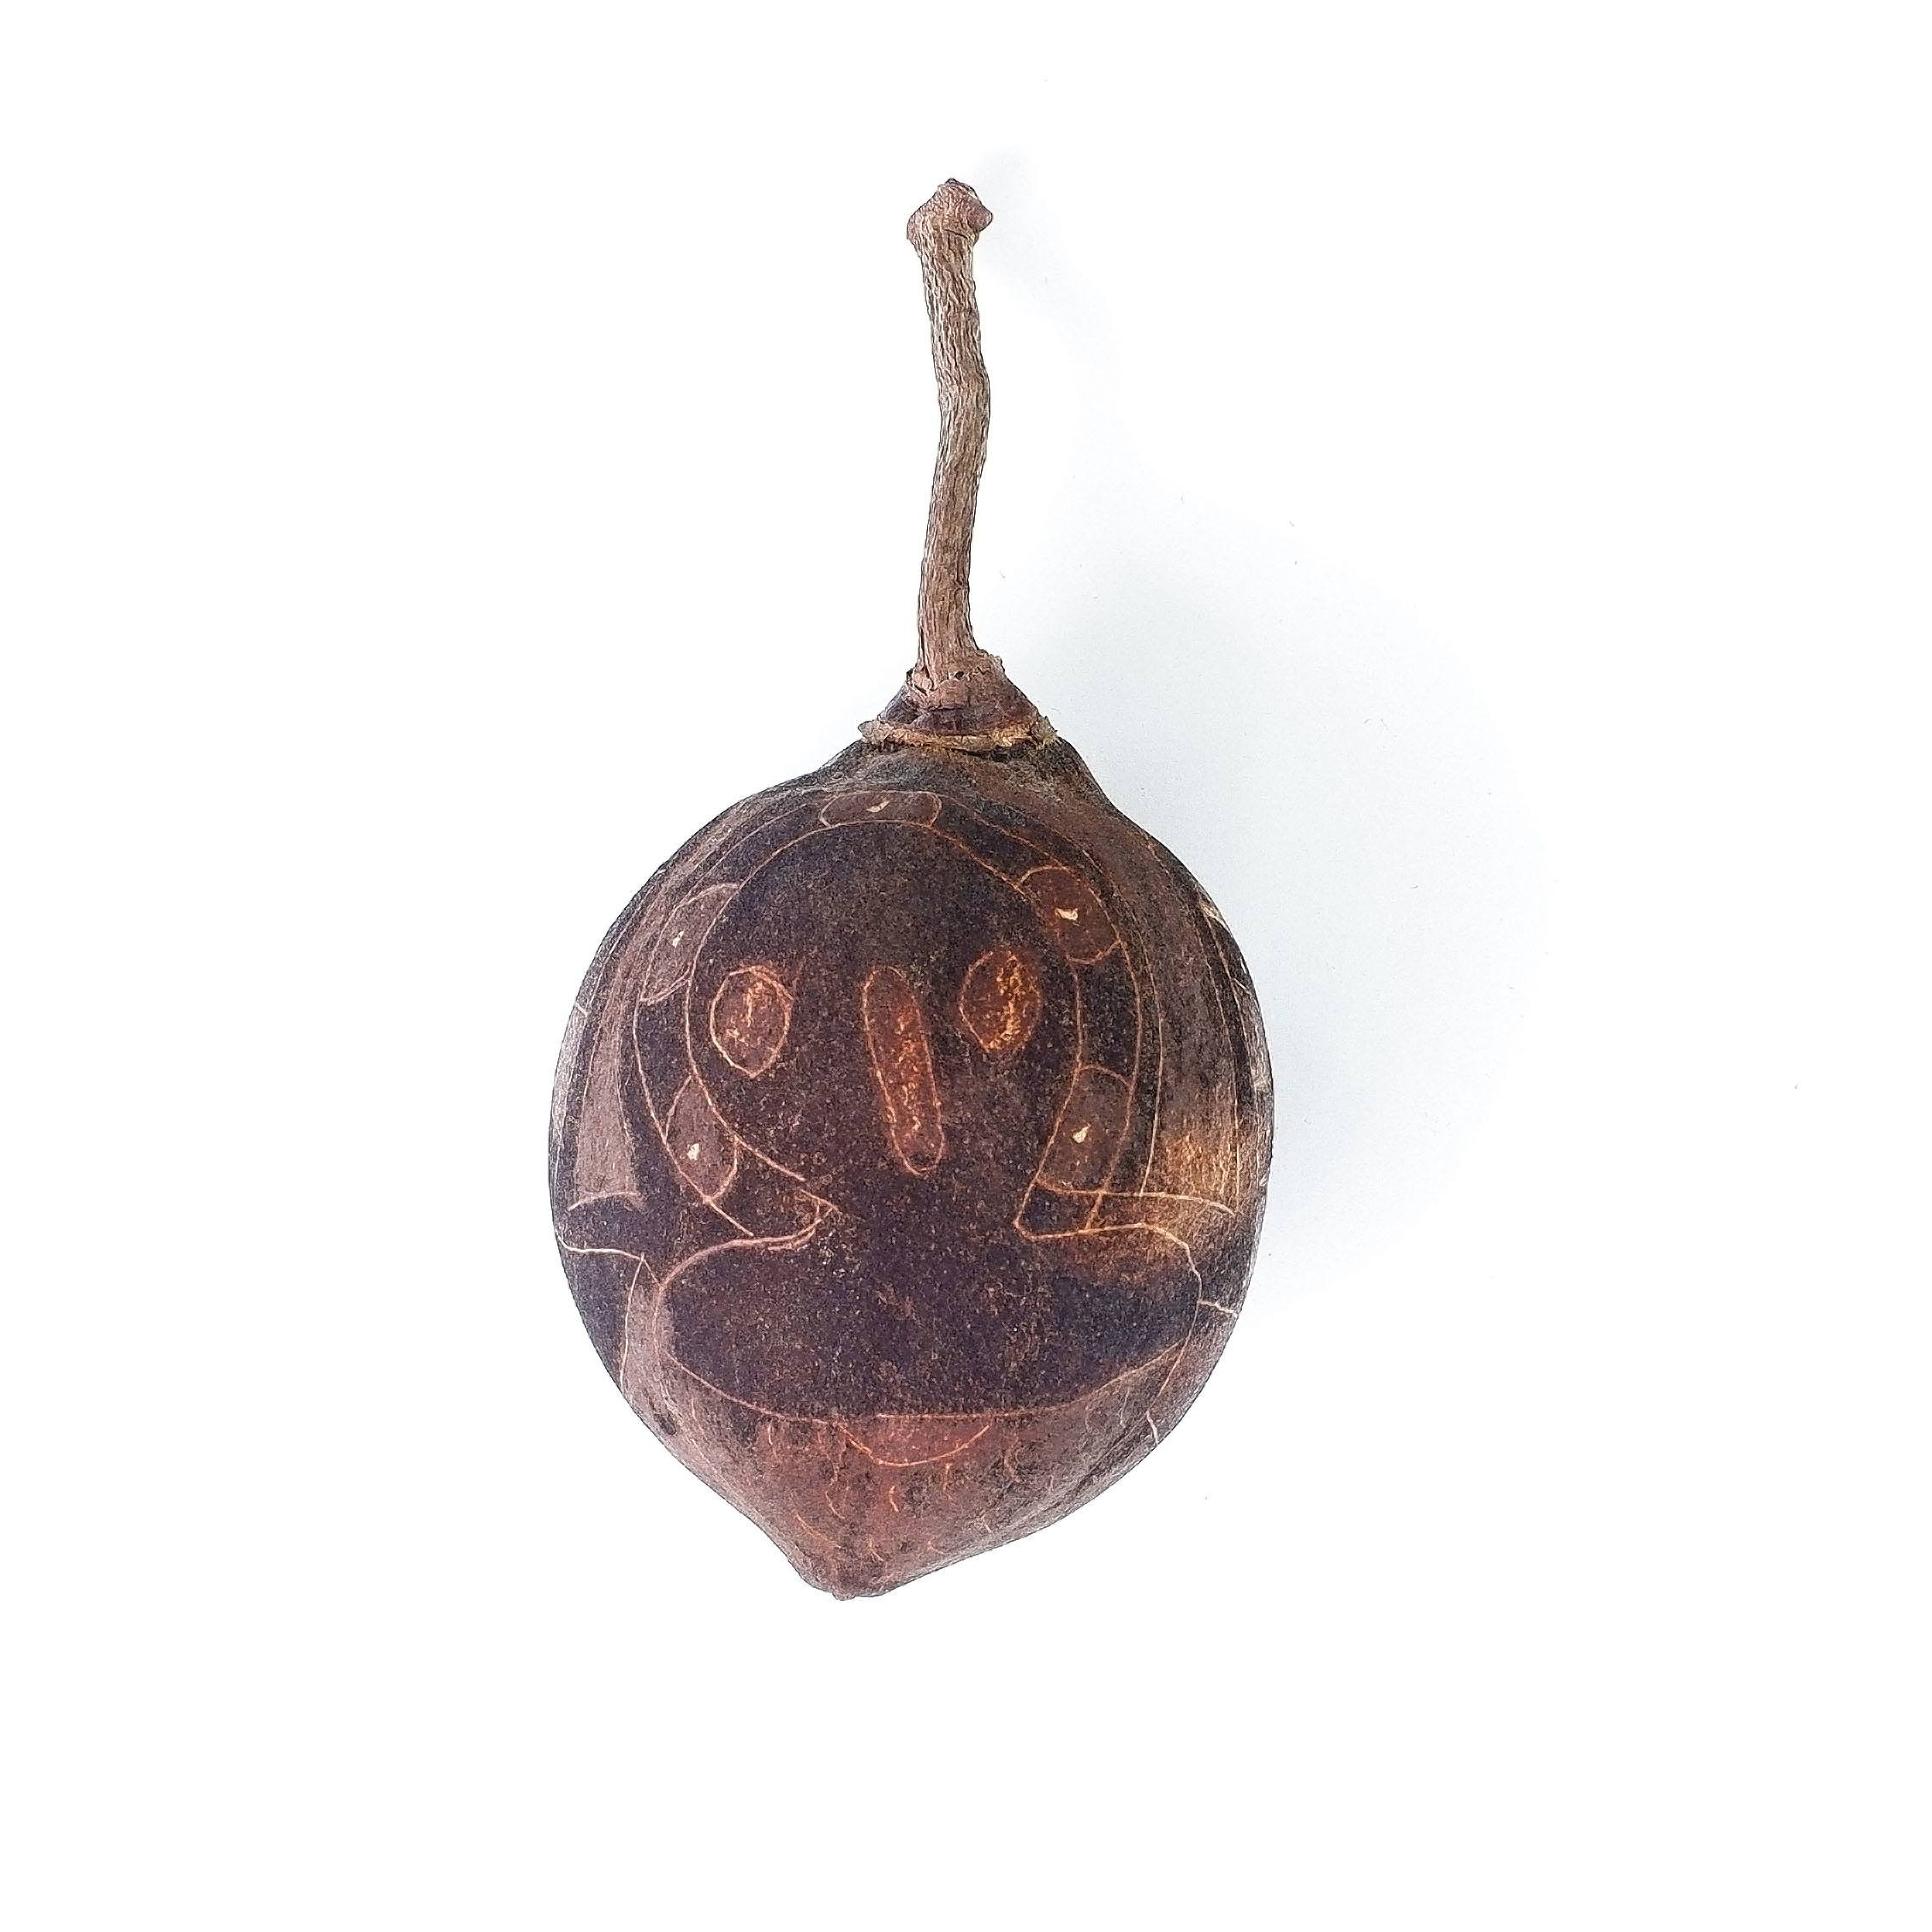 'Aboriginal Artist Unknown, Small Boab Nut, Incised Decoration of Wandjina'